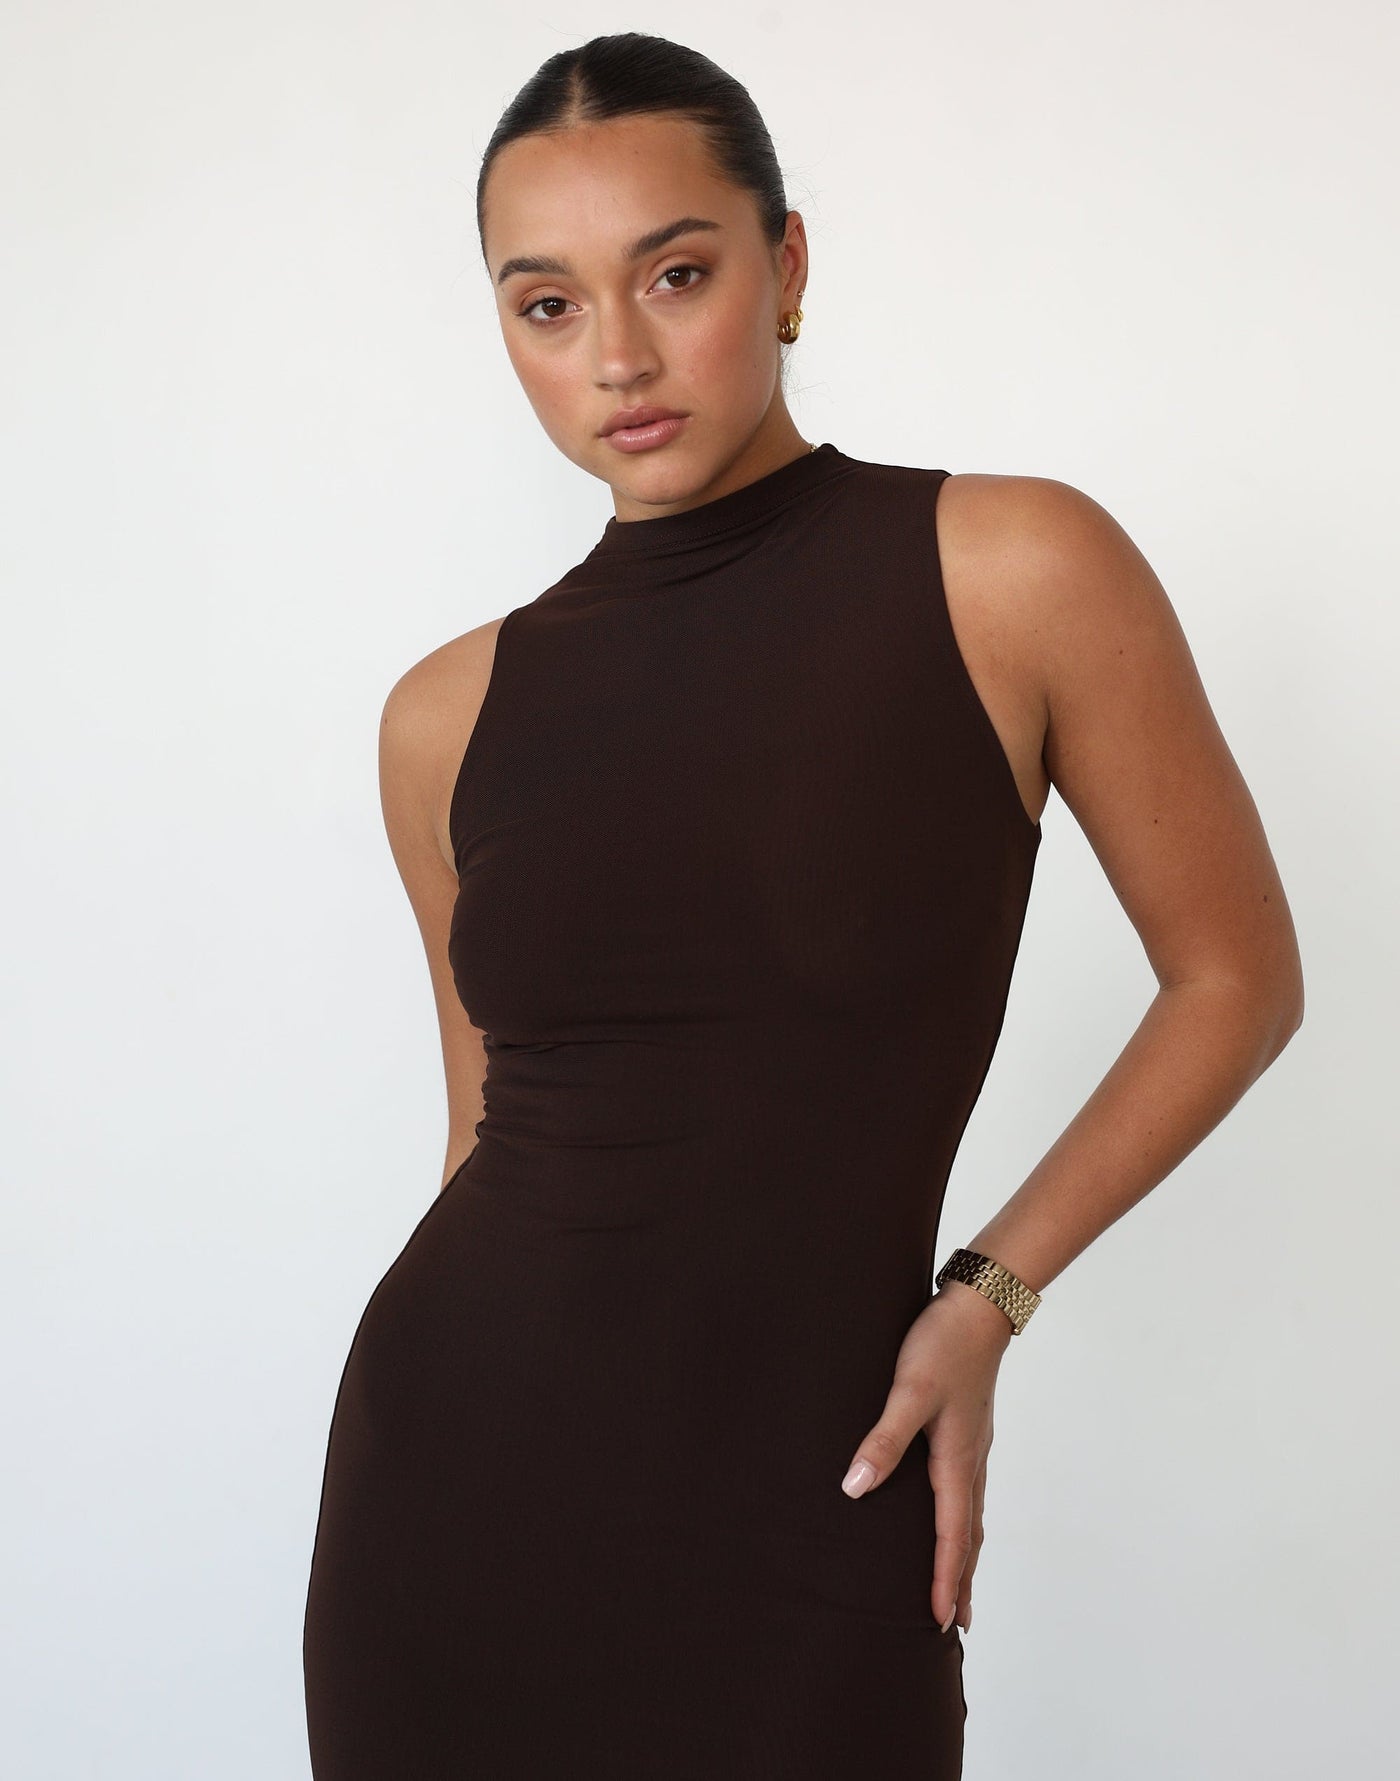 Breaking News Mesh Maxi Dress (Cocoa) - Brown High Neck Mesh Maxi Dress - Women's Dress - Charcoal Clothing